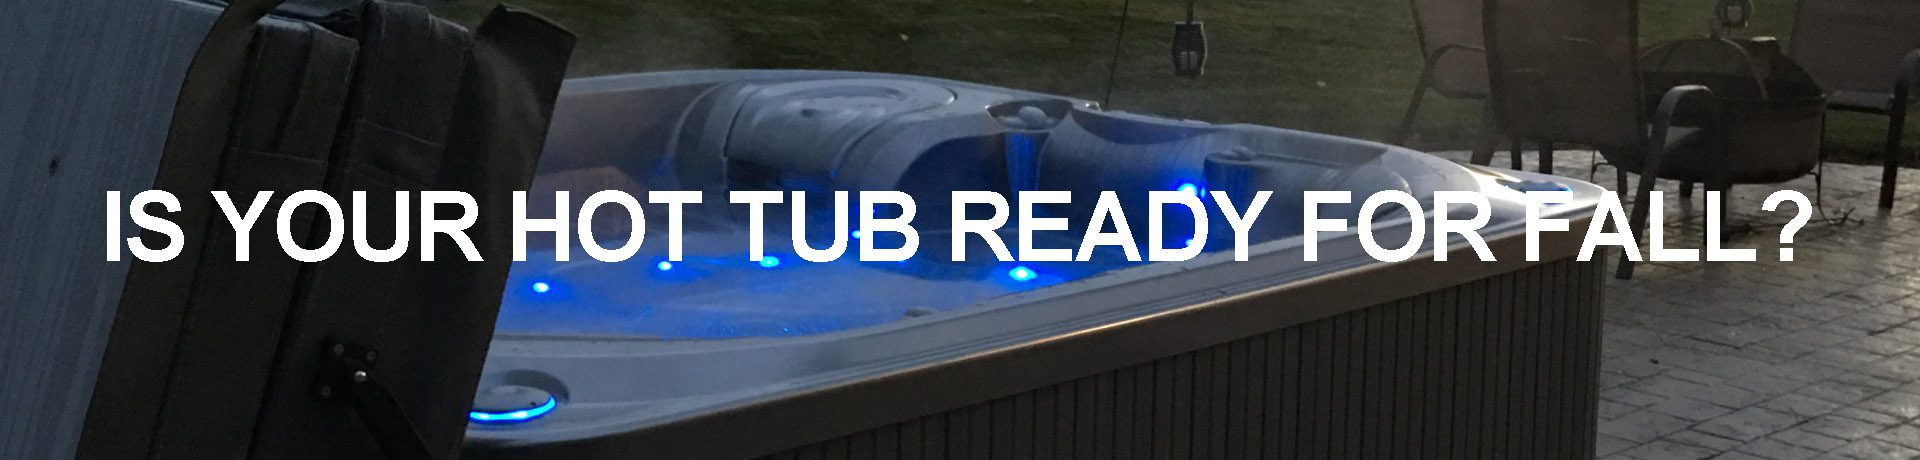 hot tub ready for fall